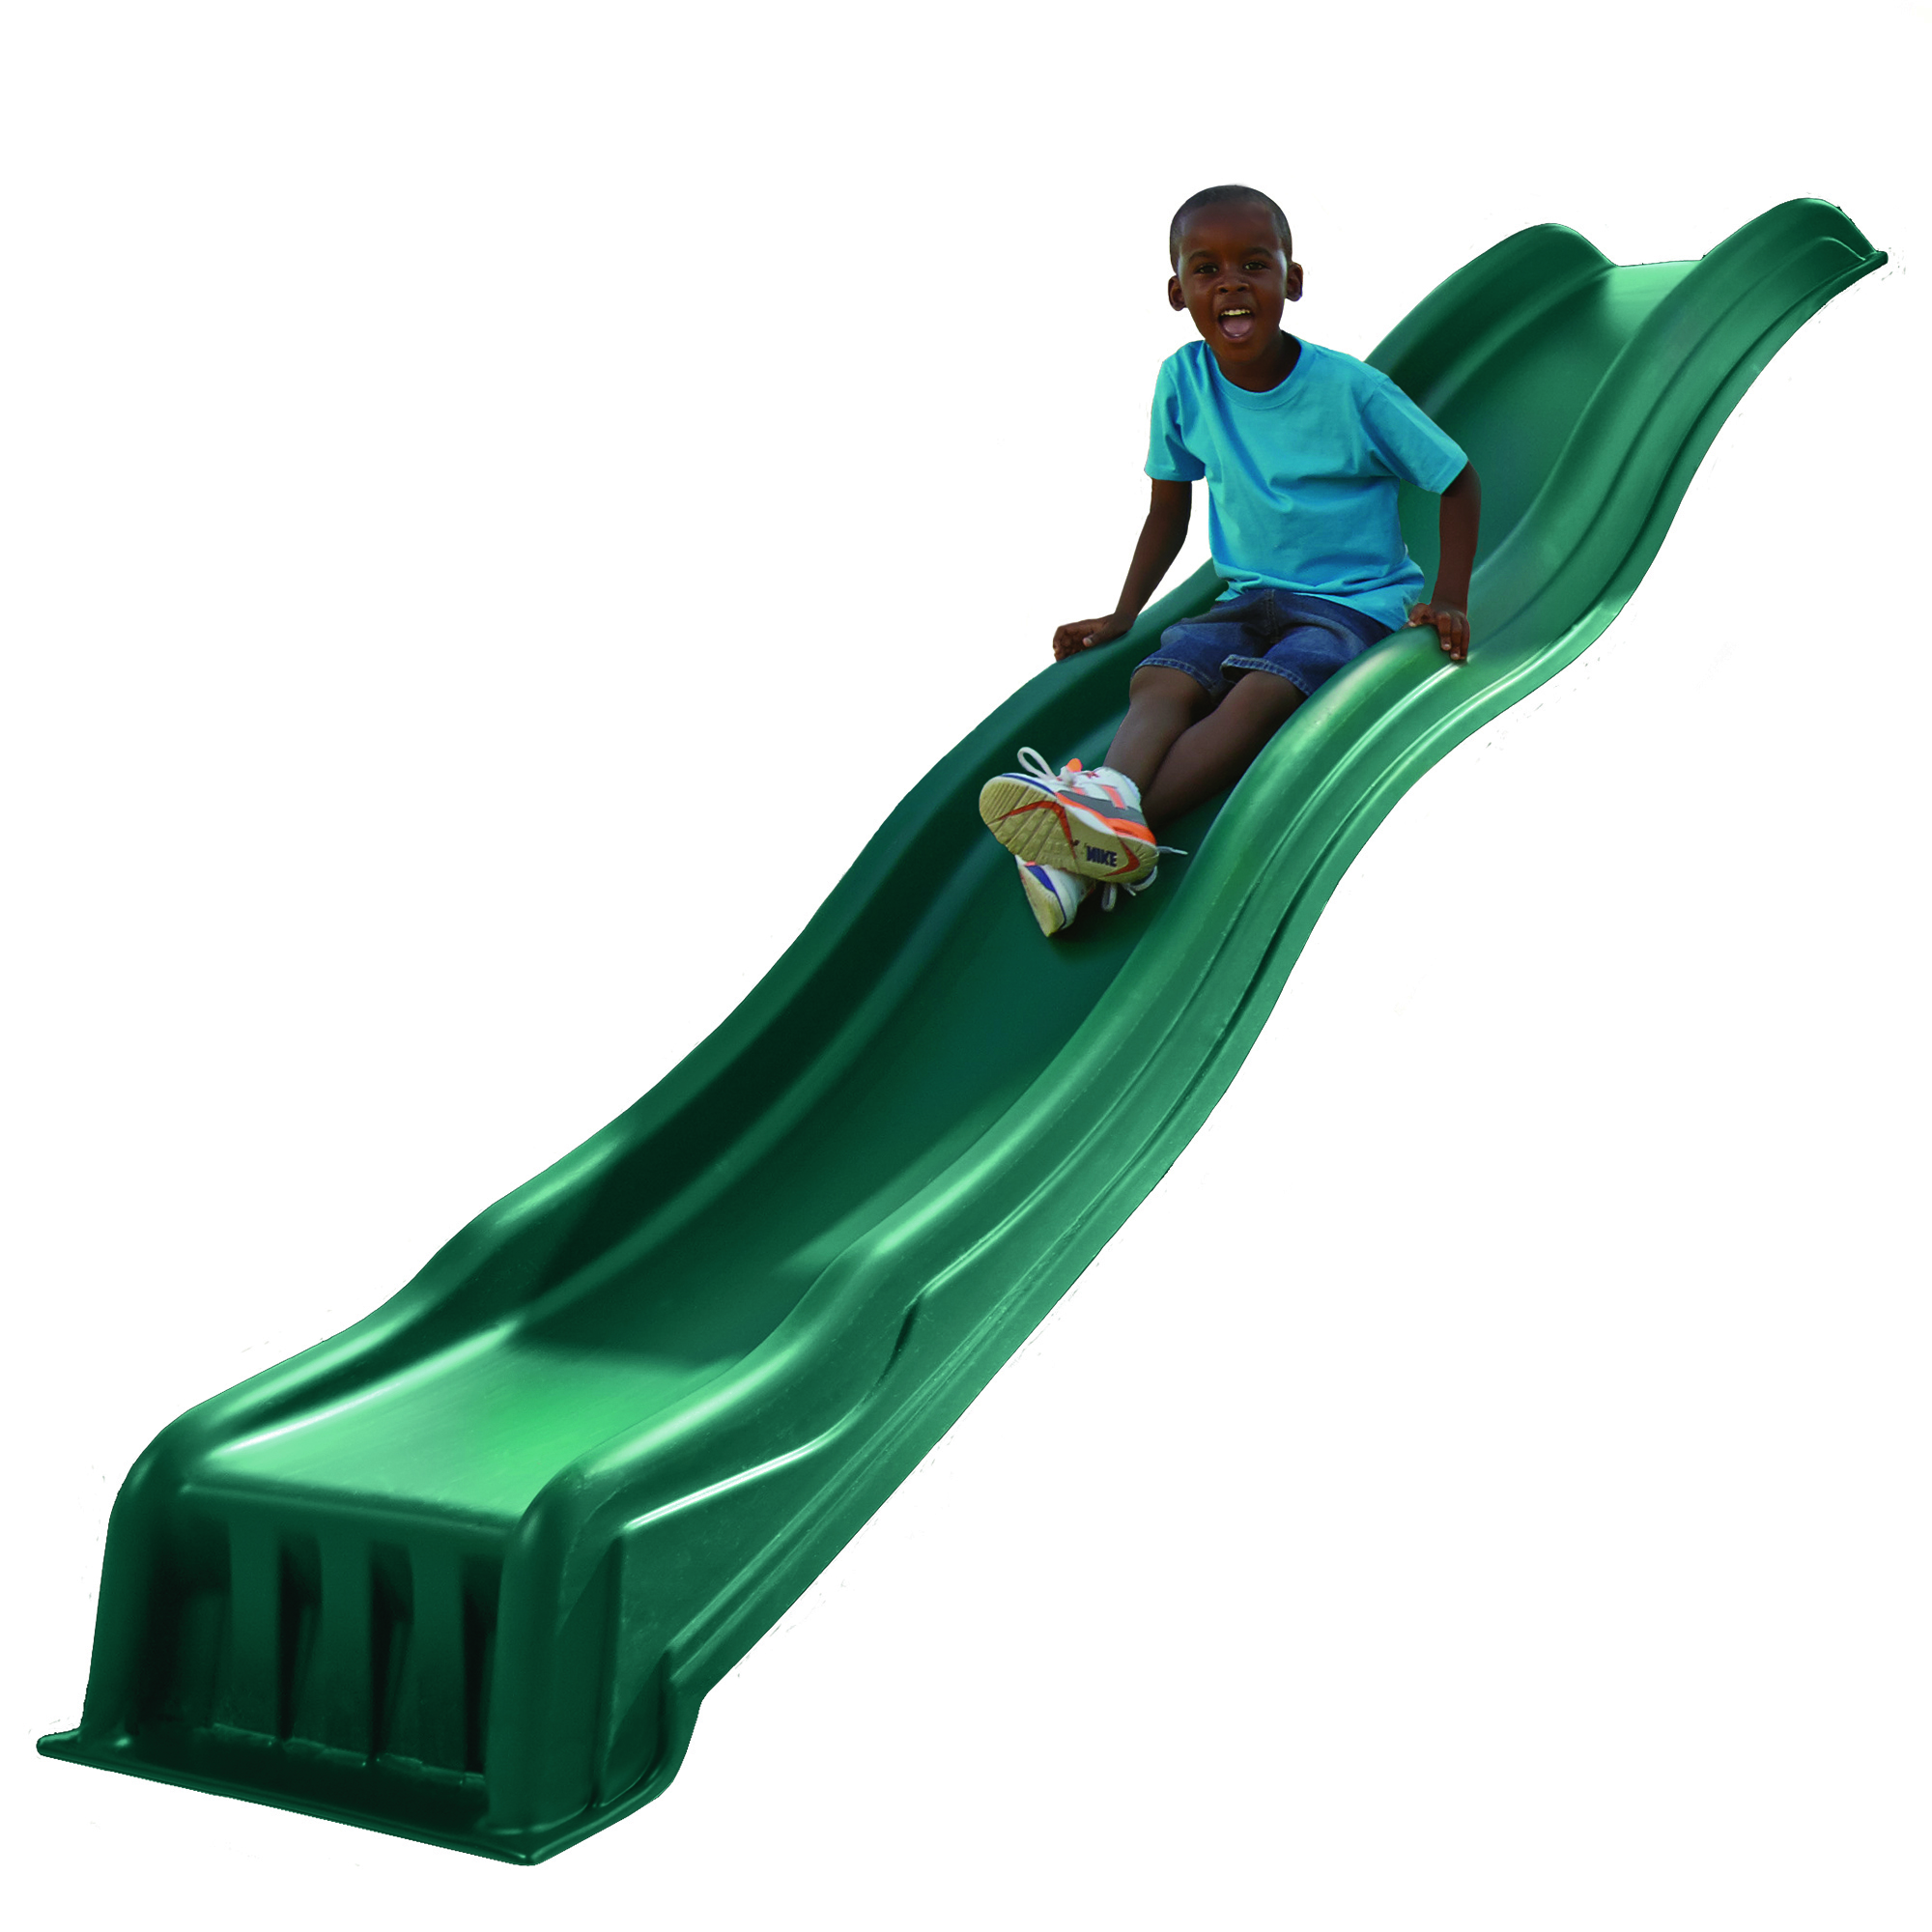 Swing-N-Slide 4 Foot Cool Wave Slide with Lifetime Warranty, Green - image 4 of 6